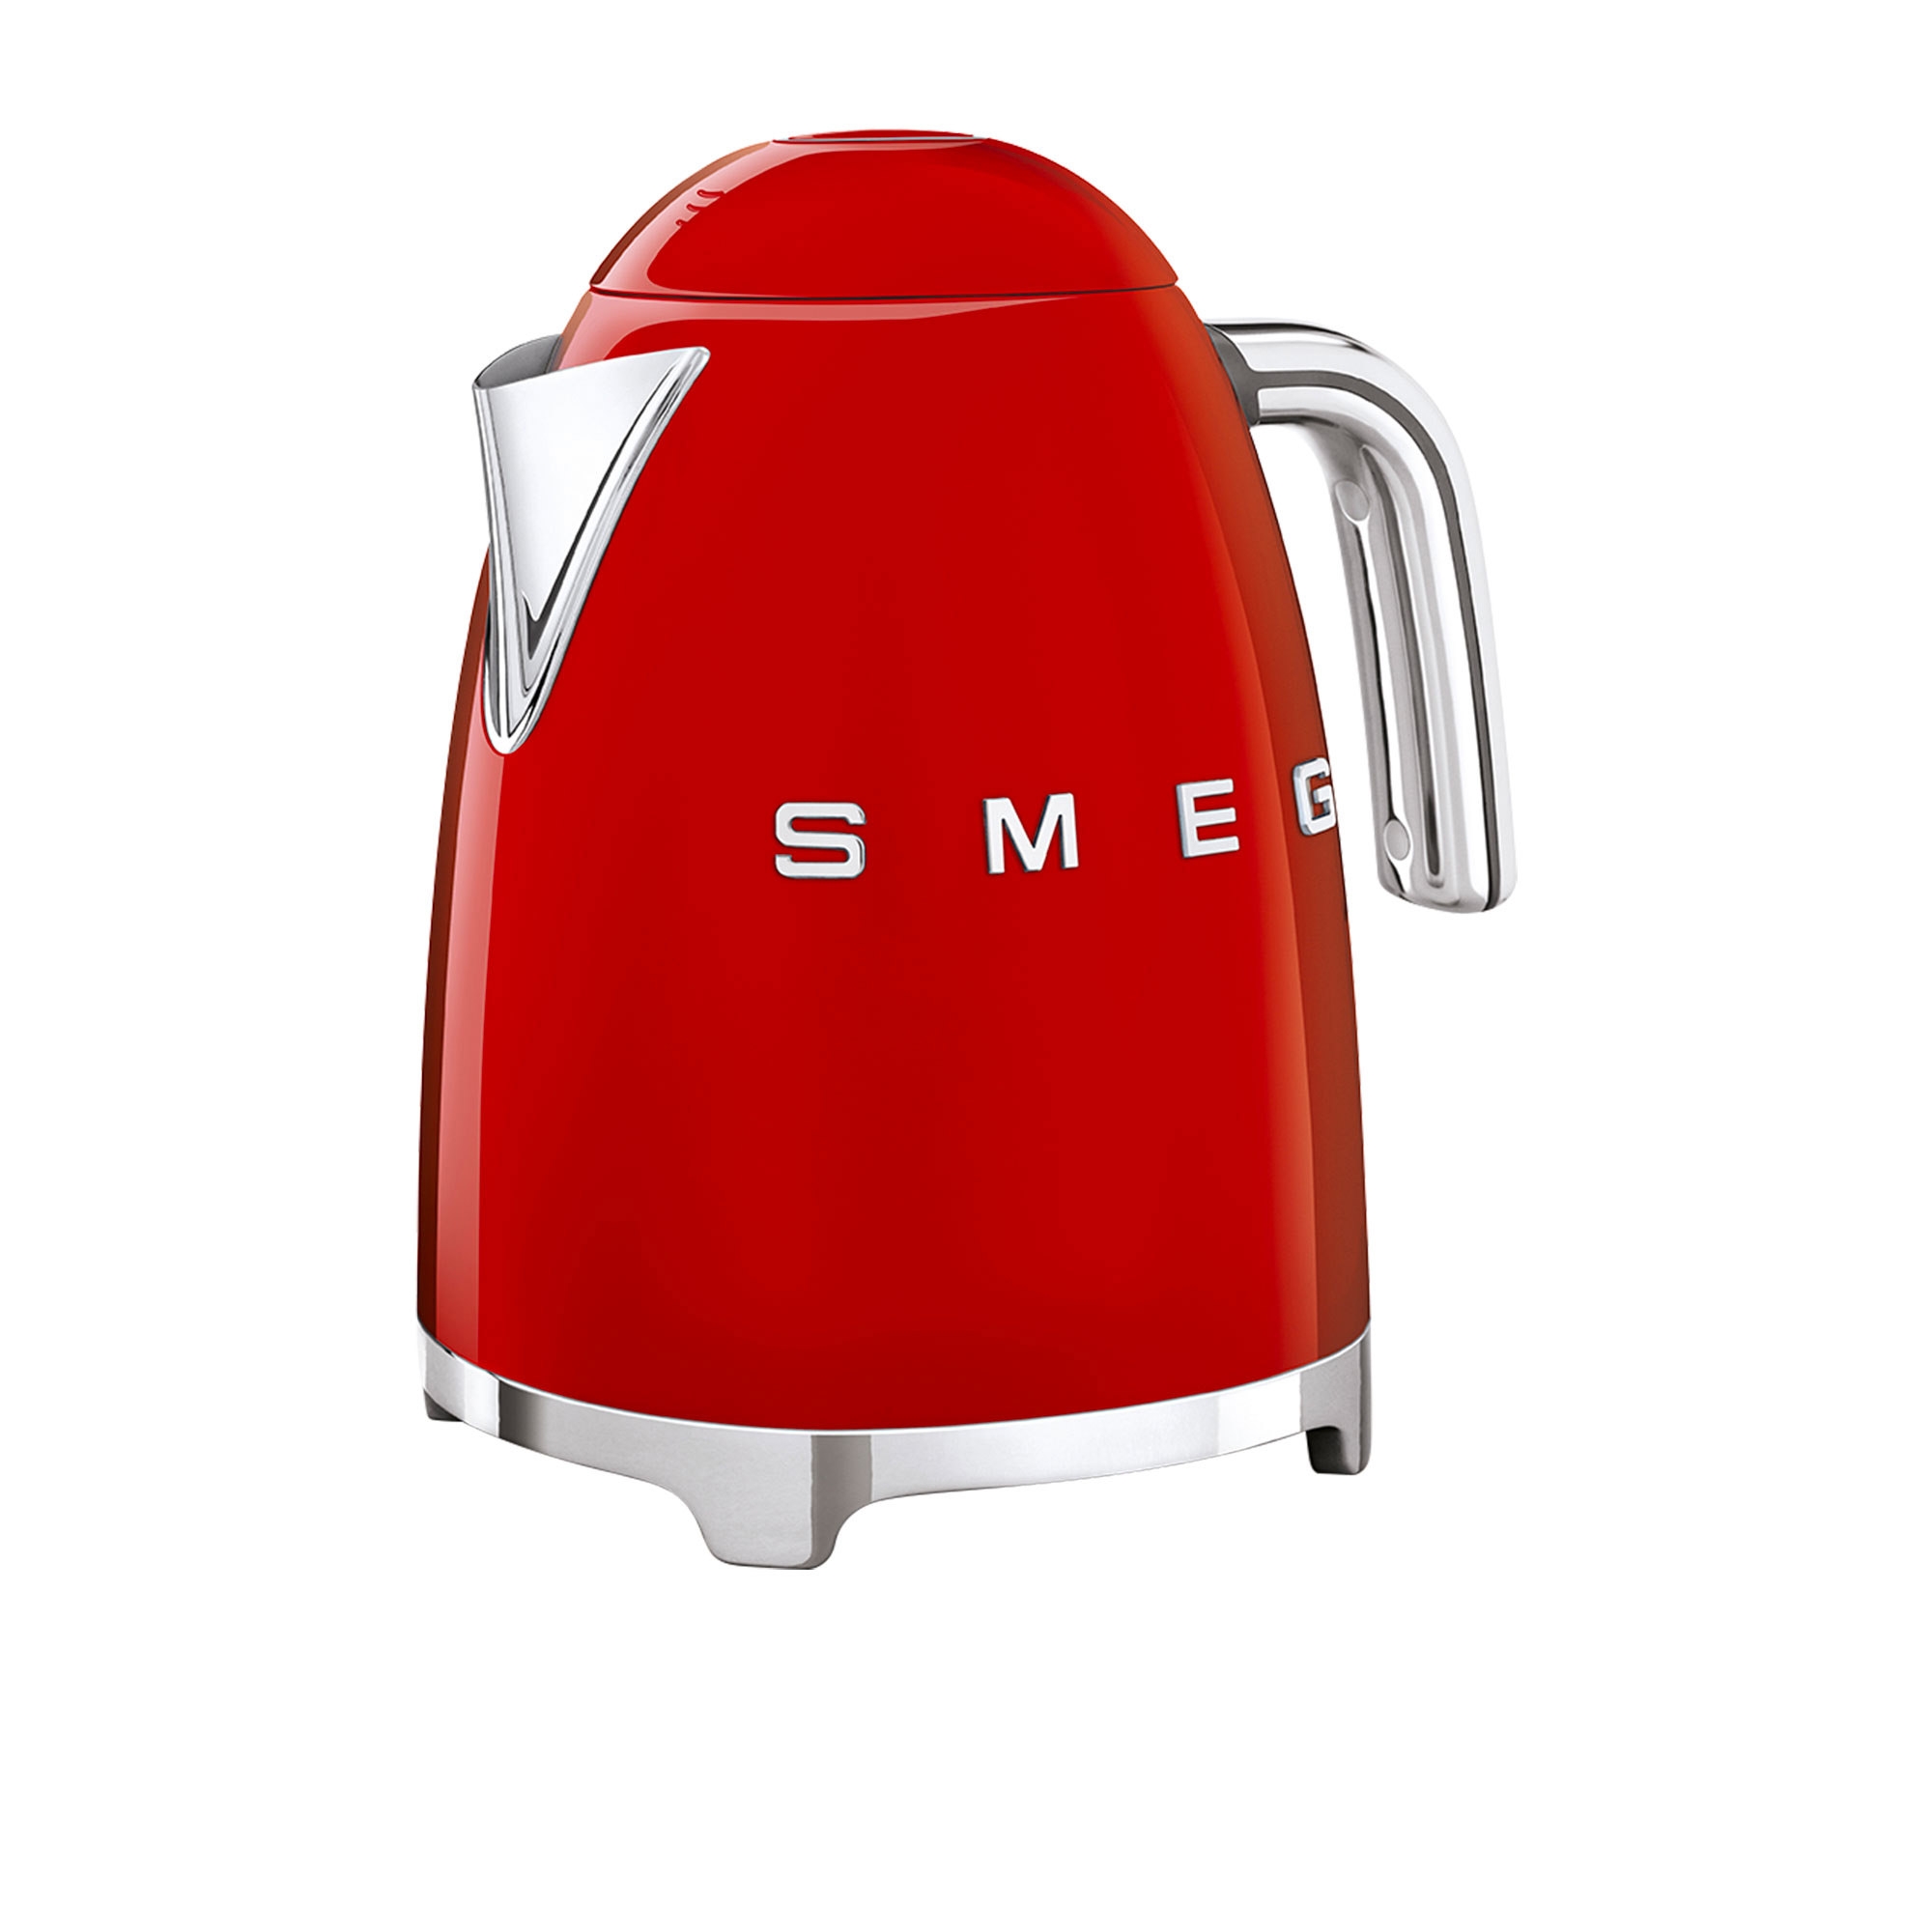 Smeg 50's Retro Style Kettle 1.7L Red Image 1